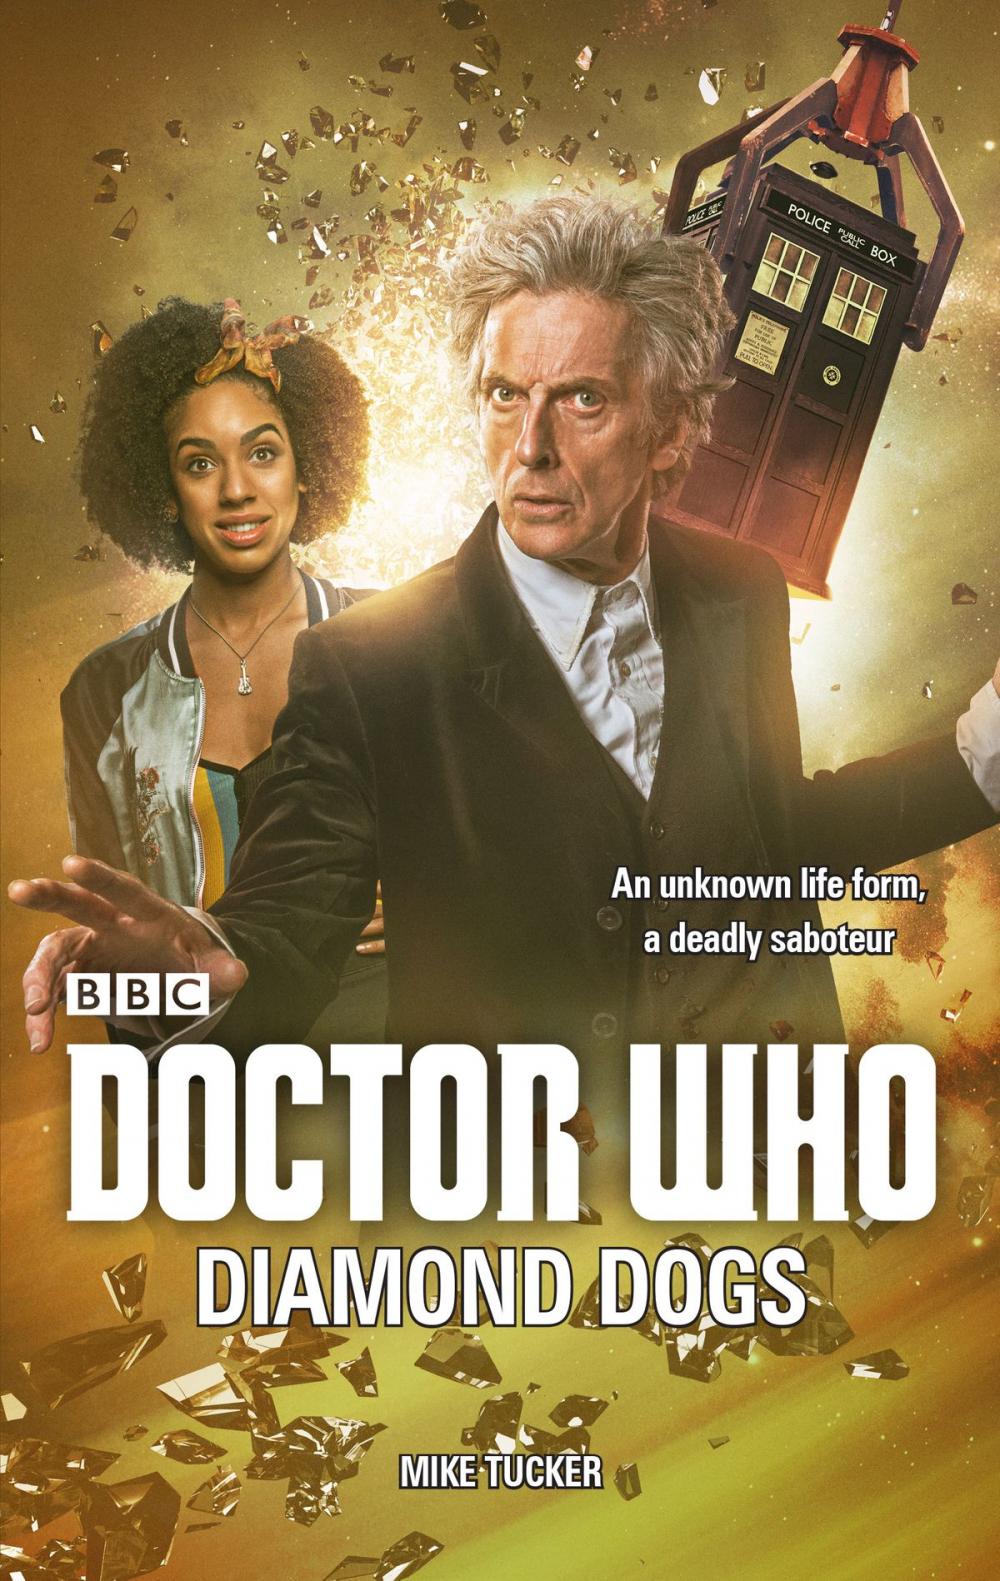 Big bigCover of Doctor Who: Diamond Dogs